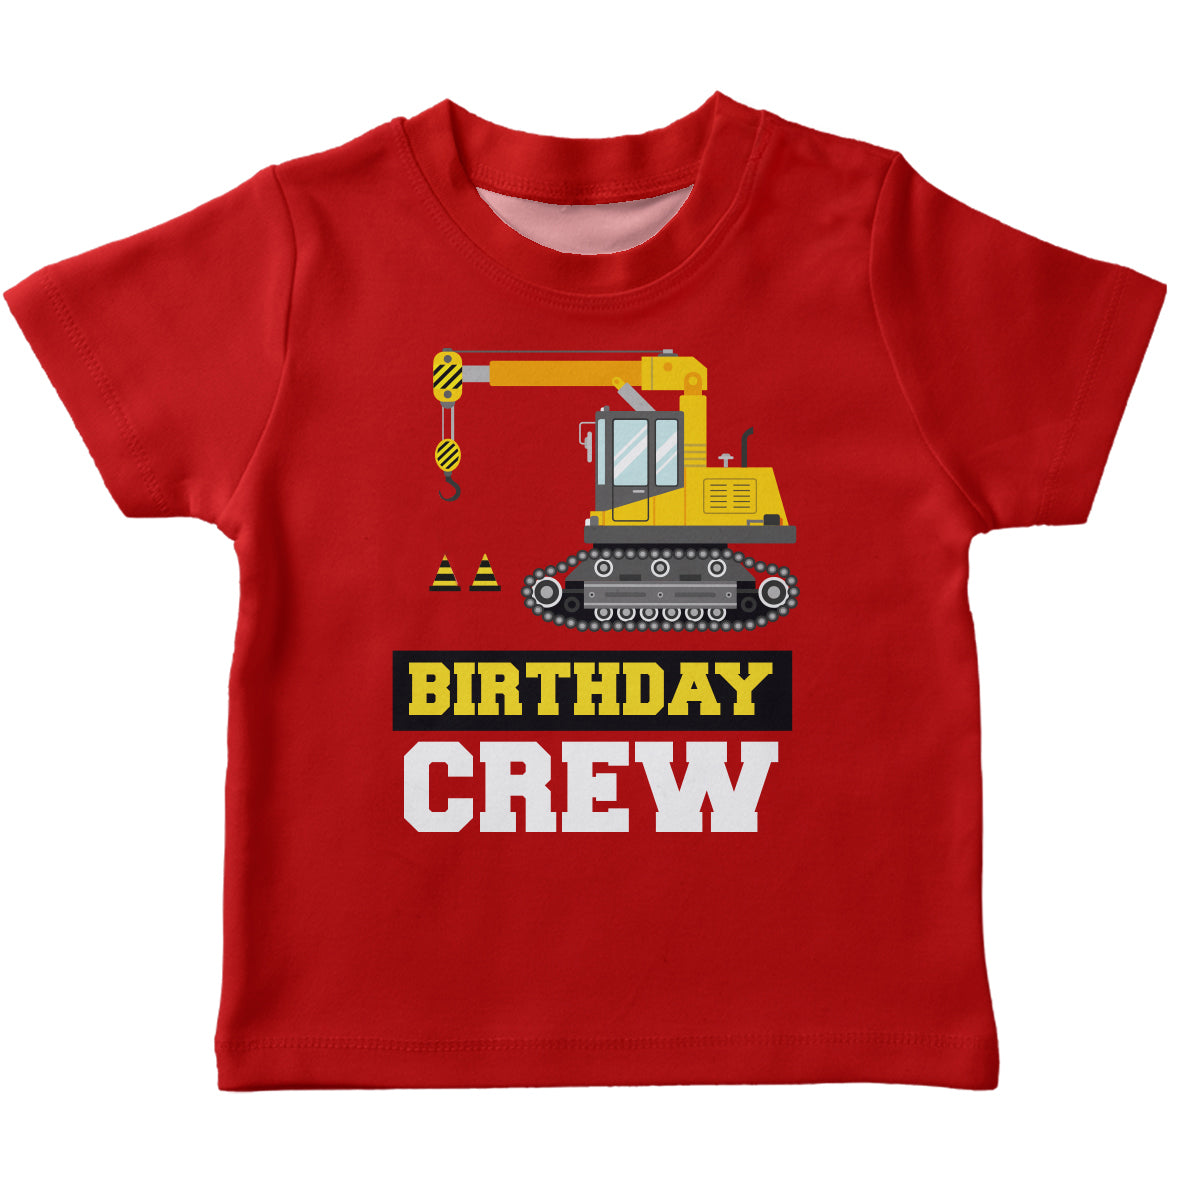 Red birthday crew short sleeve boys tee shirt - Wimziy&Co.